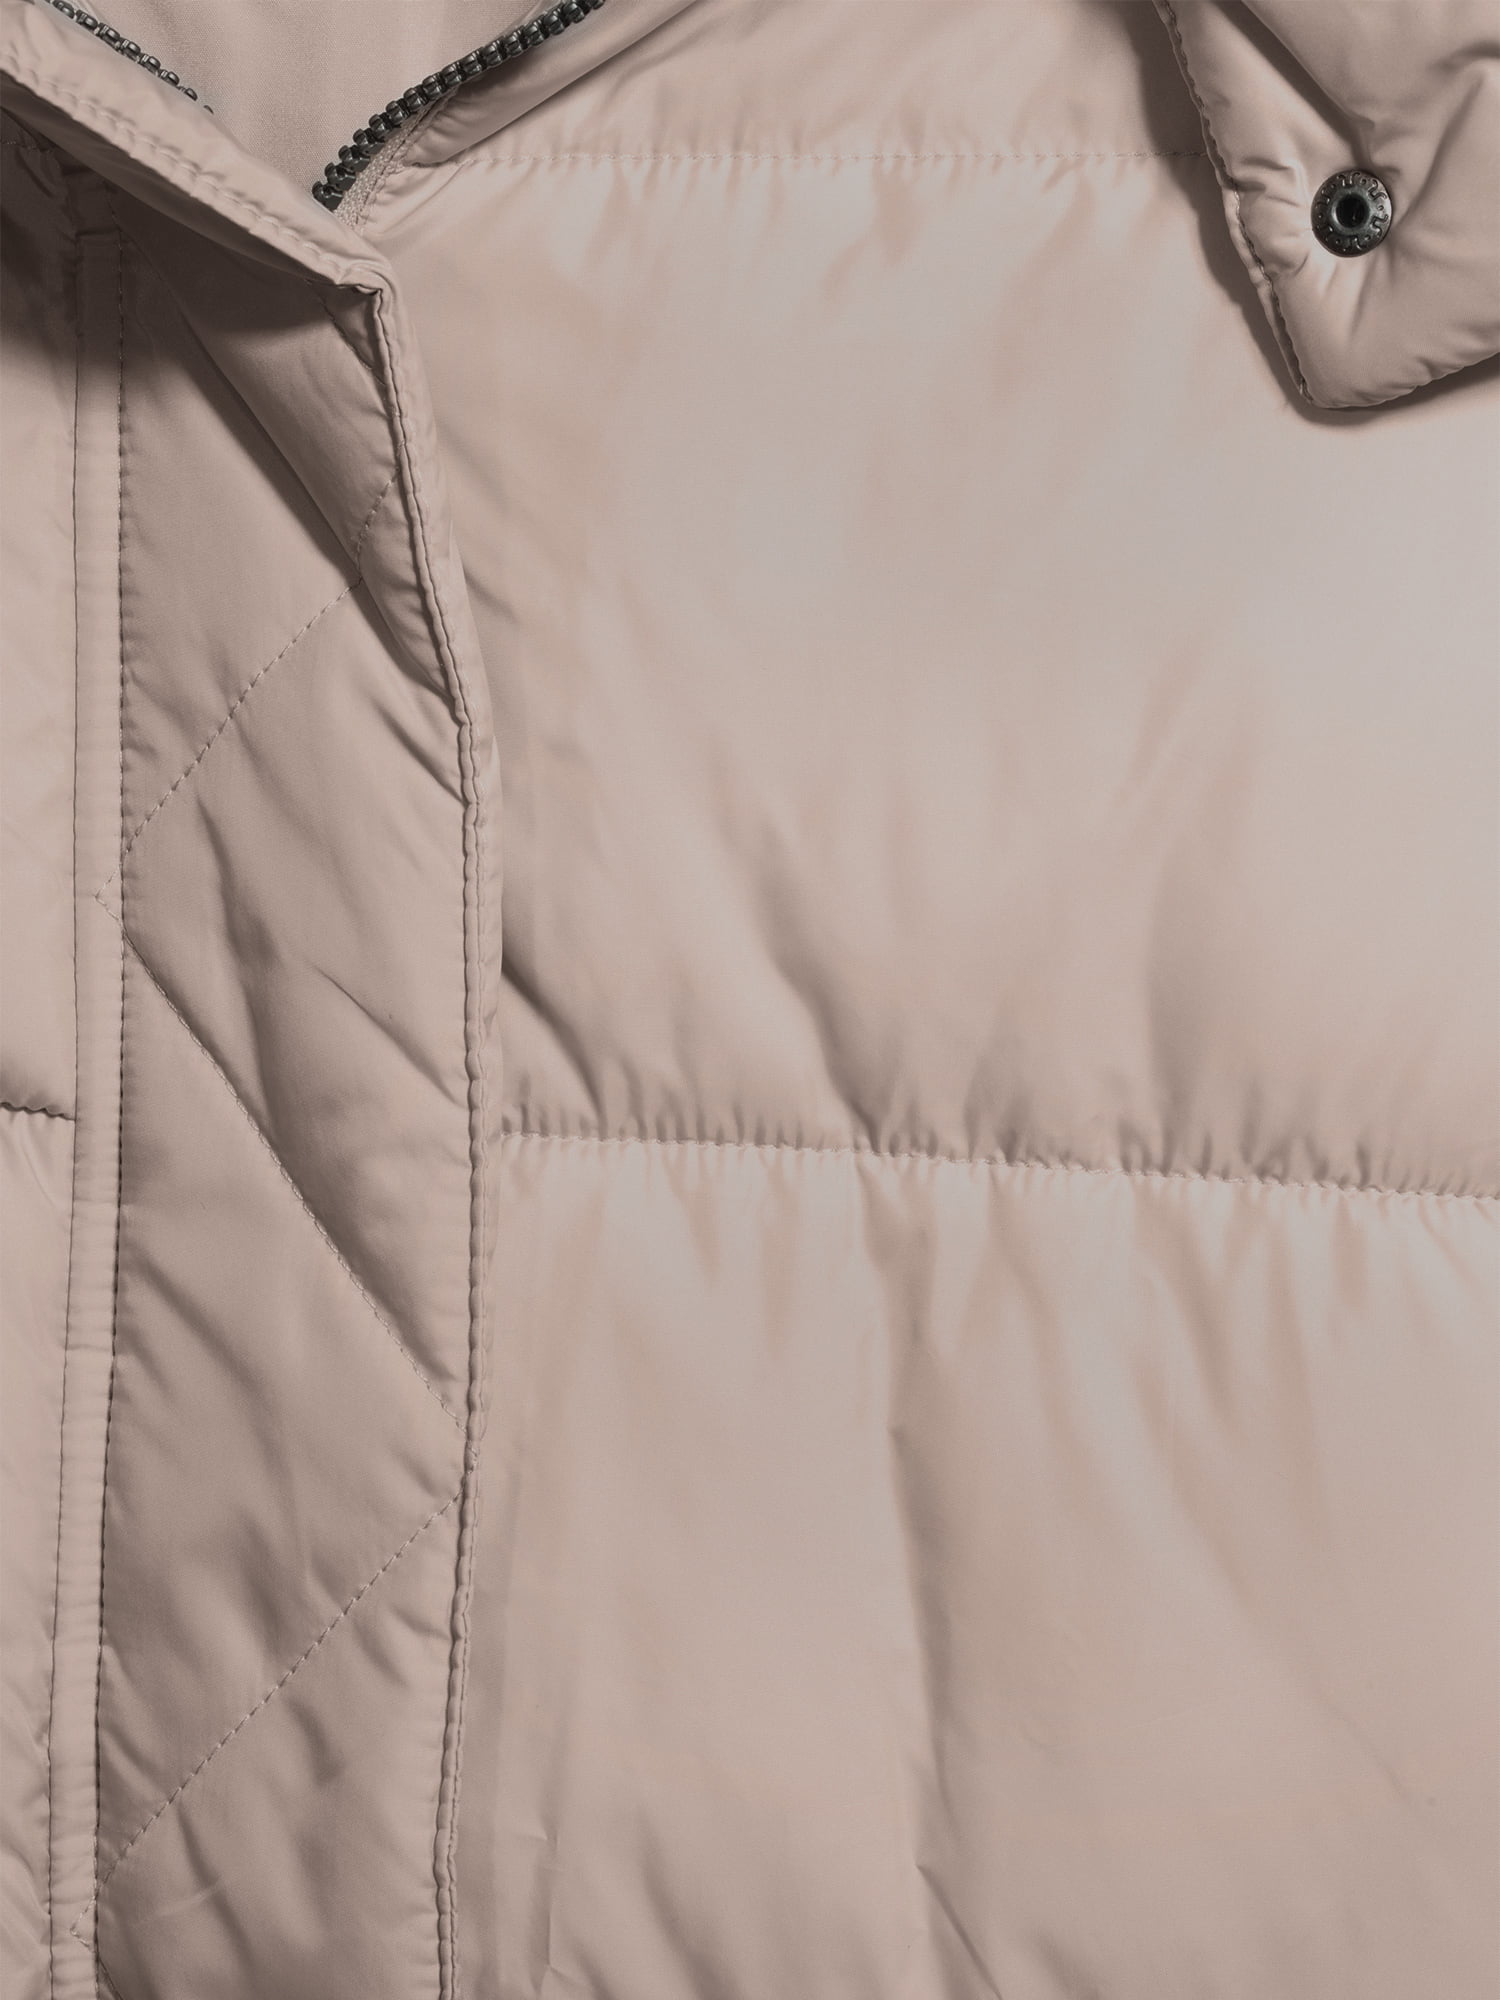 Lucky Brand Size Medium Missy Pillow Puffer Jacket Coat White